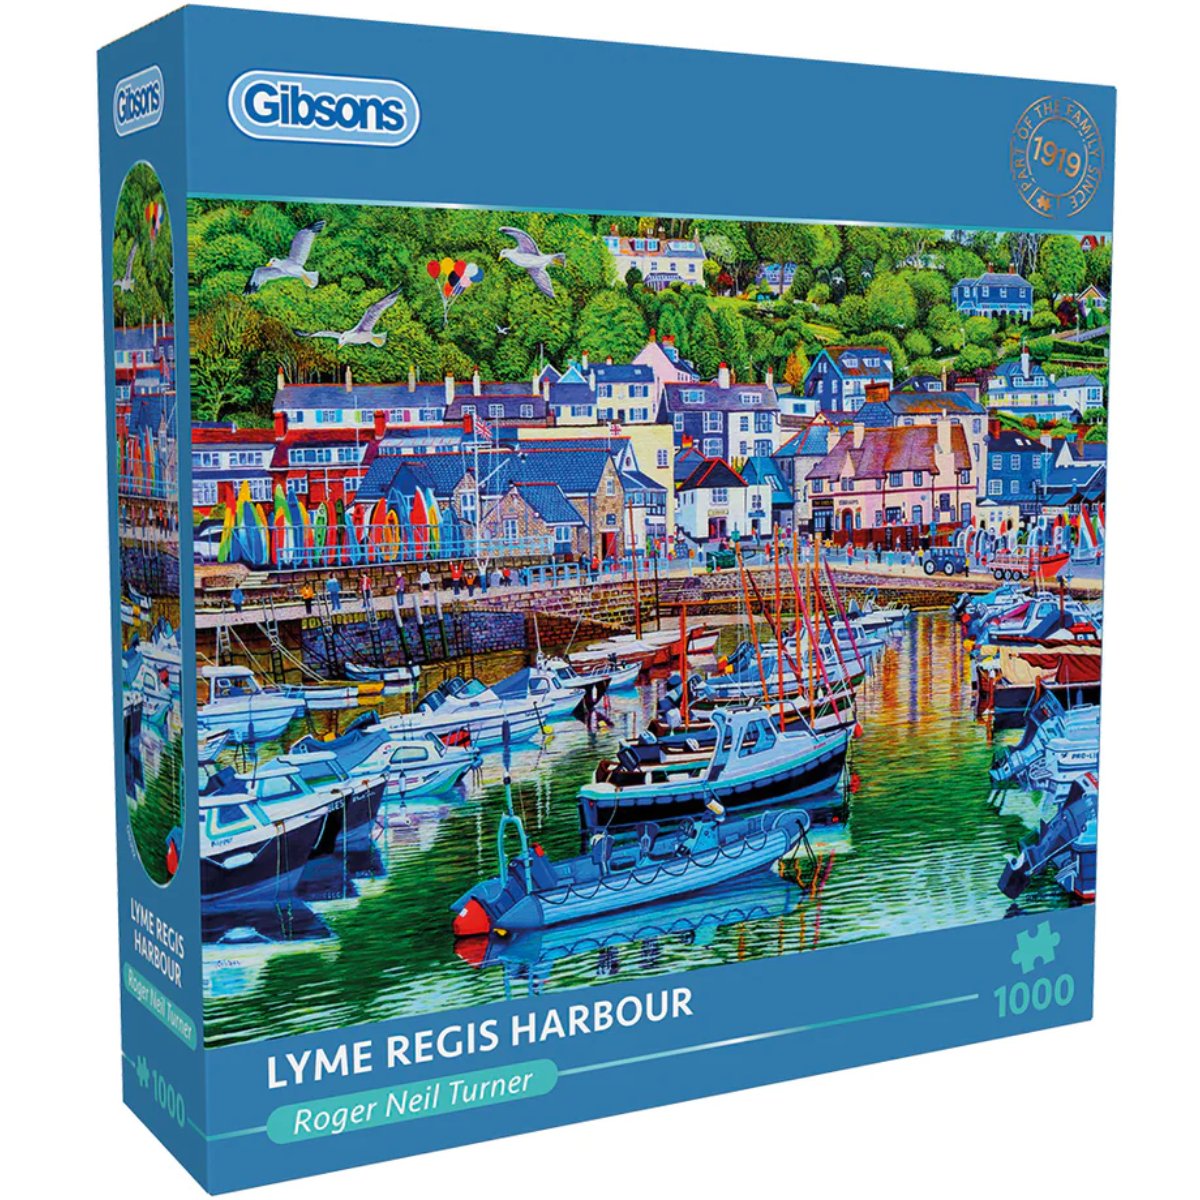 Gibsons Lyme Regis Harbour 1000 Piece Jigsaw Puzzle - Box